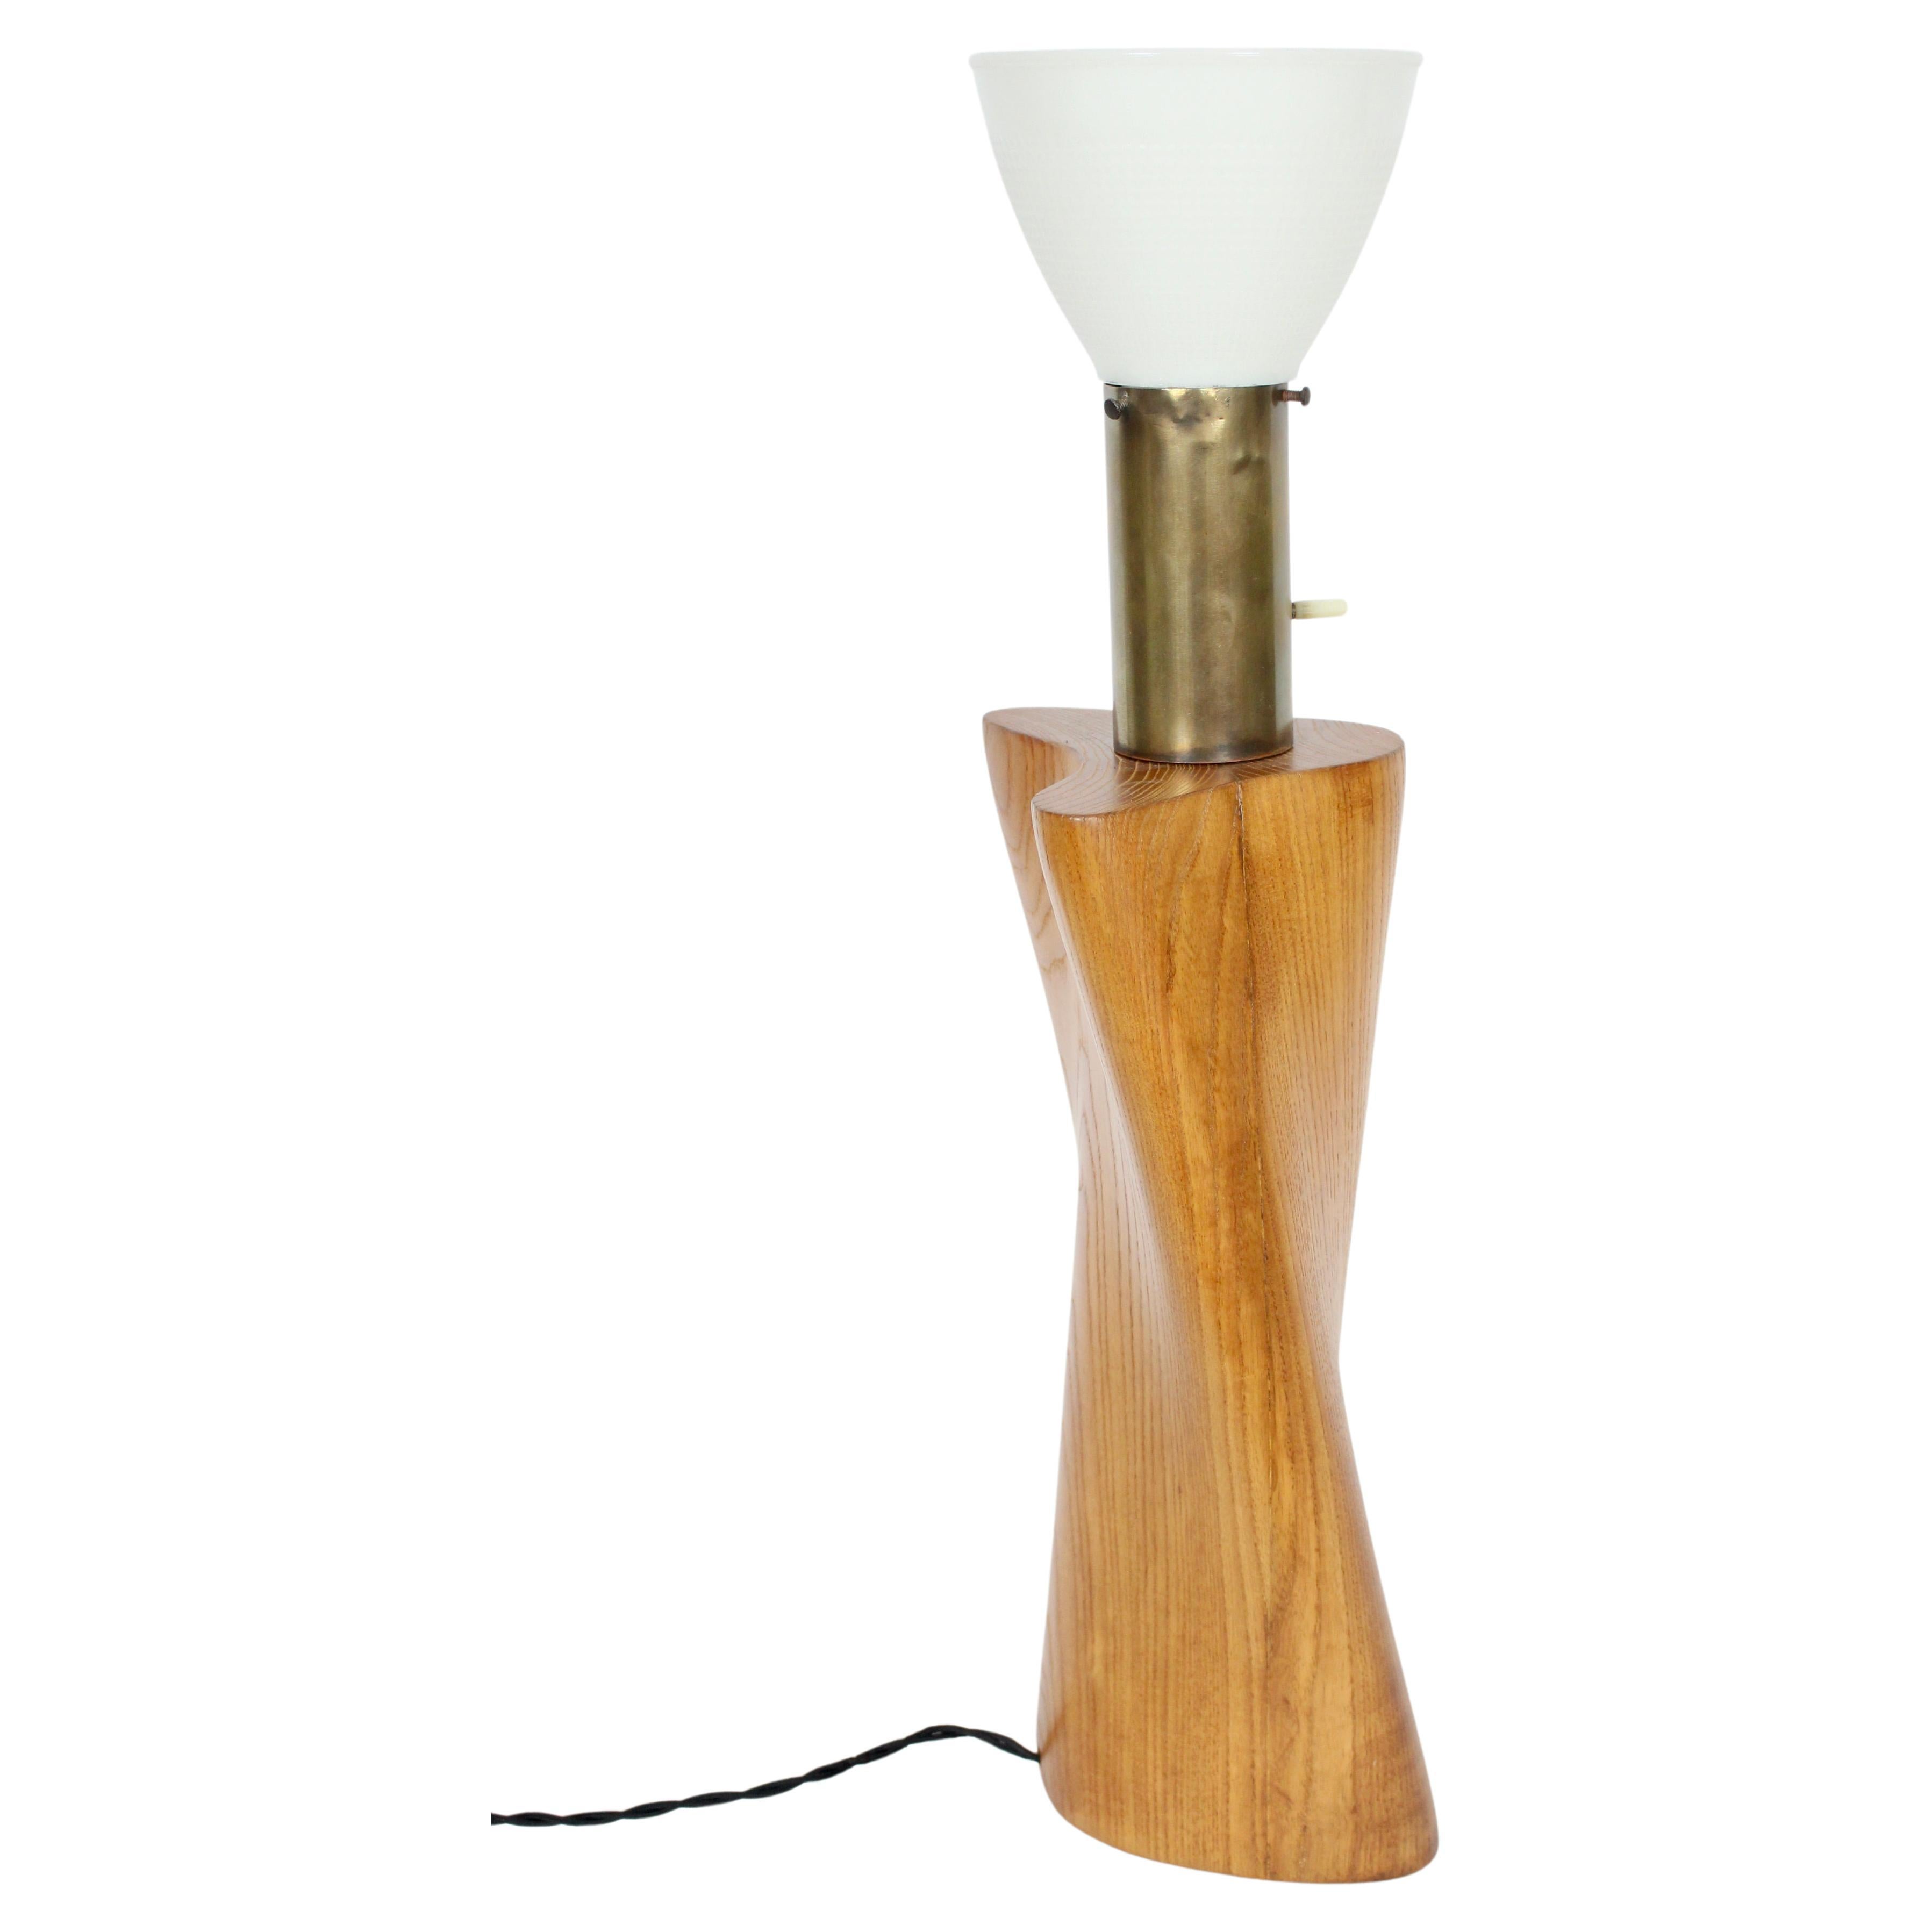 Yasha Heifetz Biomorphic Ash Table Lamp with Milk Glass Shade, 1940s